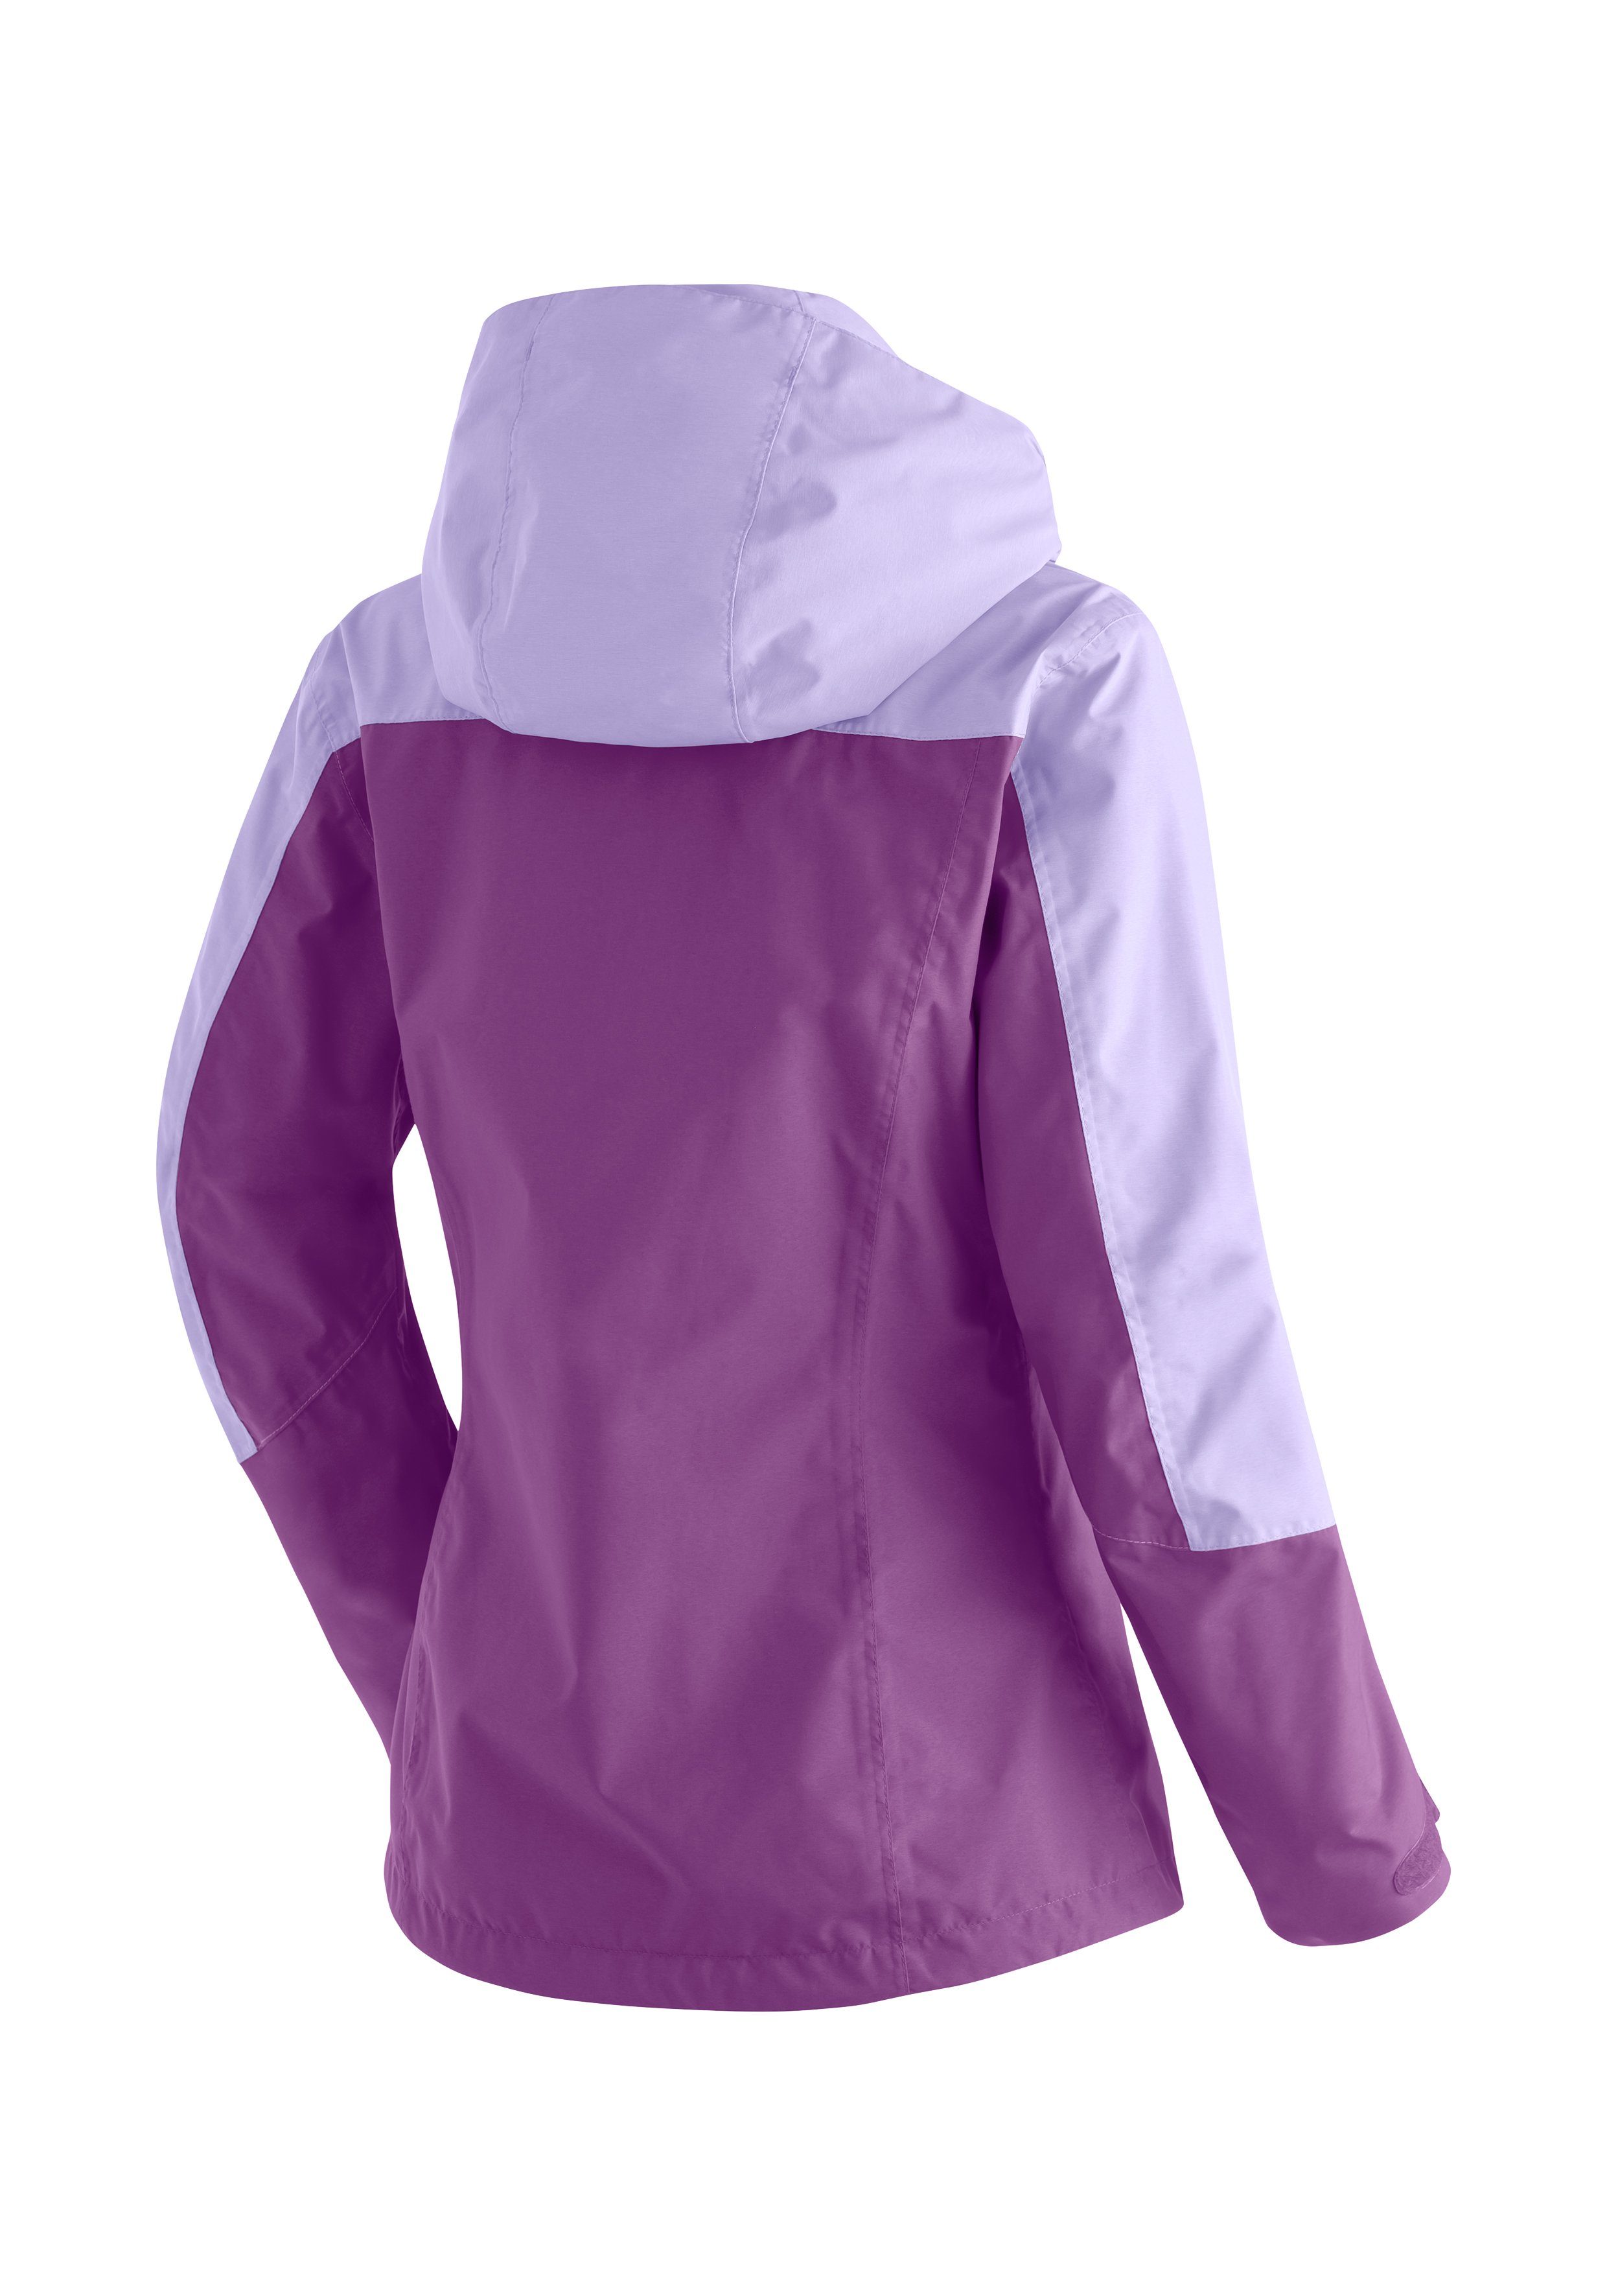 Partu Wasserdichte Maier purpurviolett Funktionsjacke W Material Sports atmungsaktivem aus Outdoorjacke